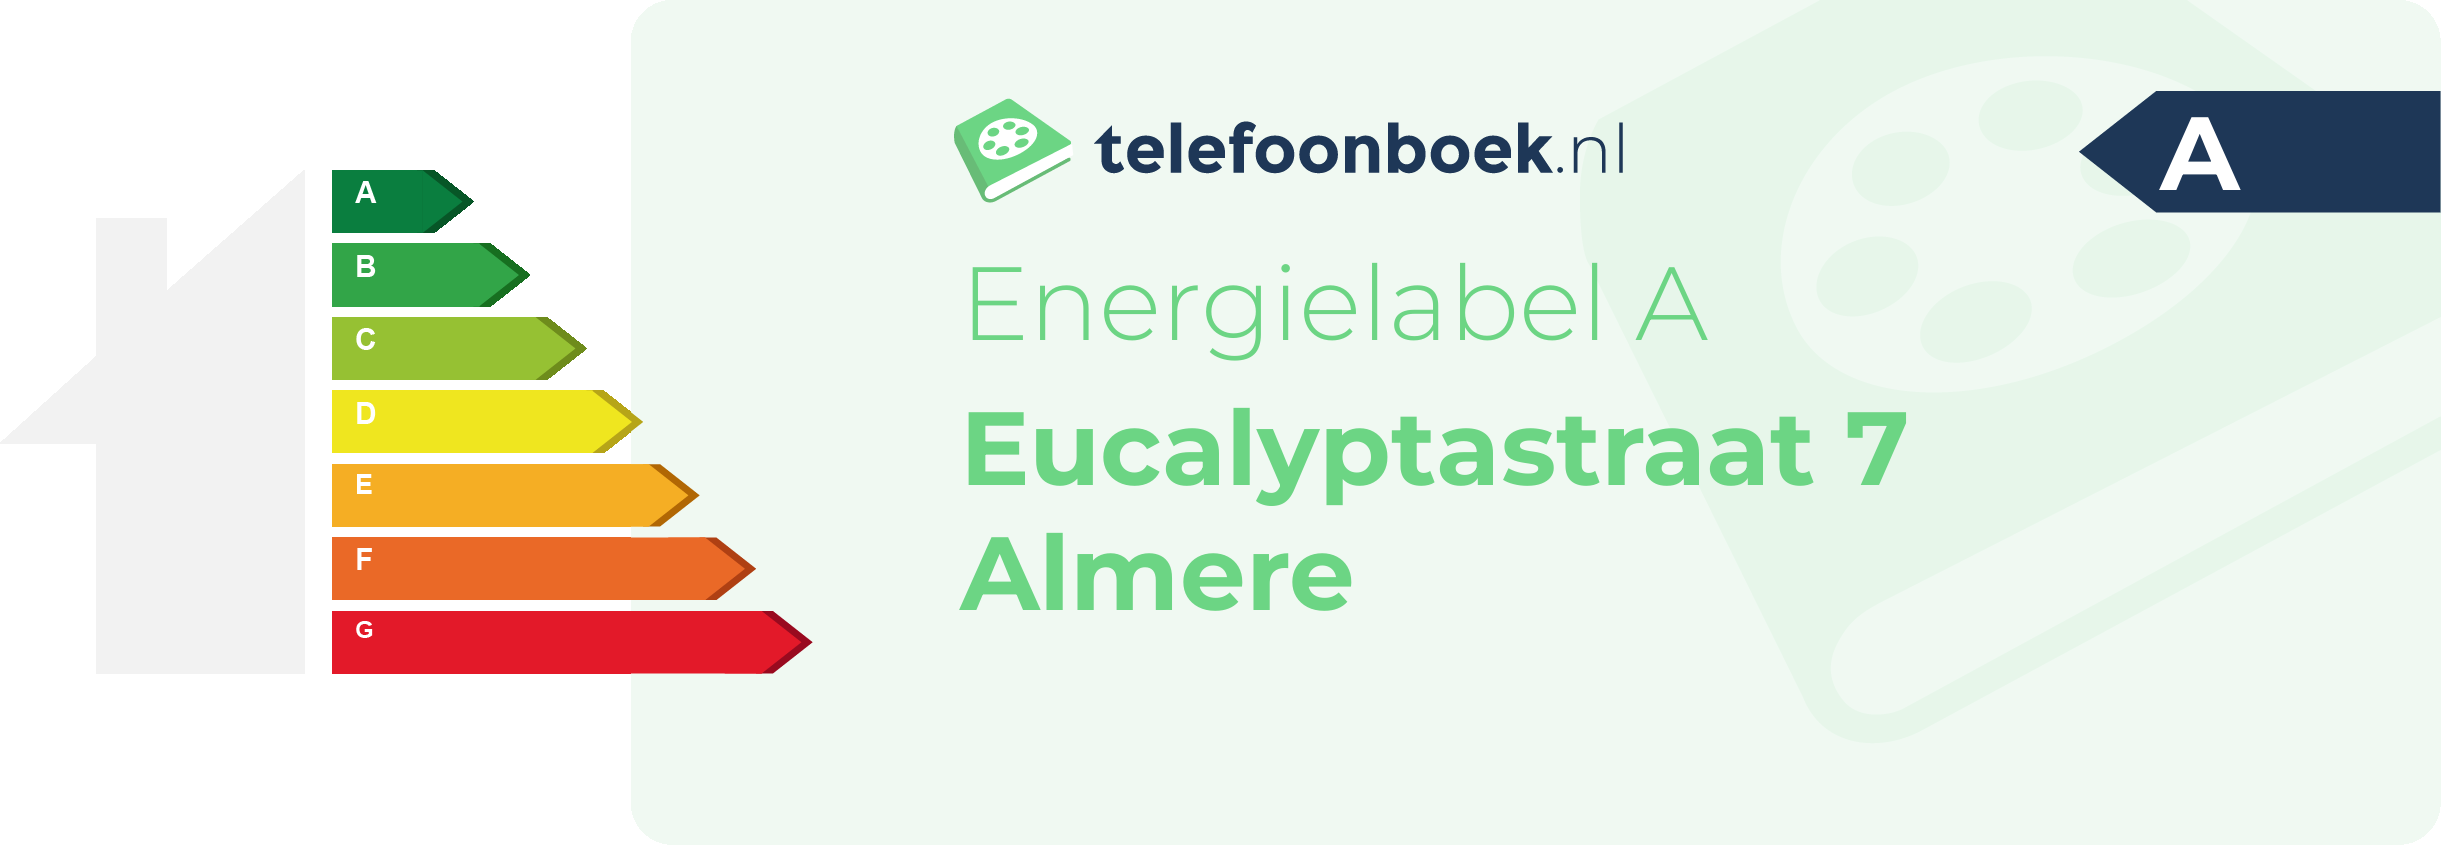 Energielabel Eucalyptastraat 7 Almere